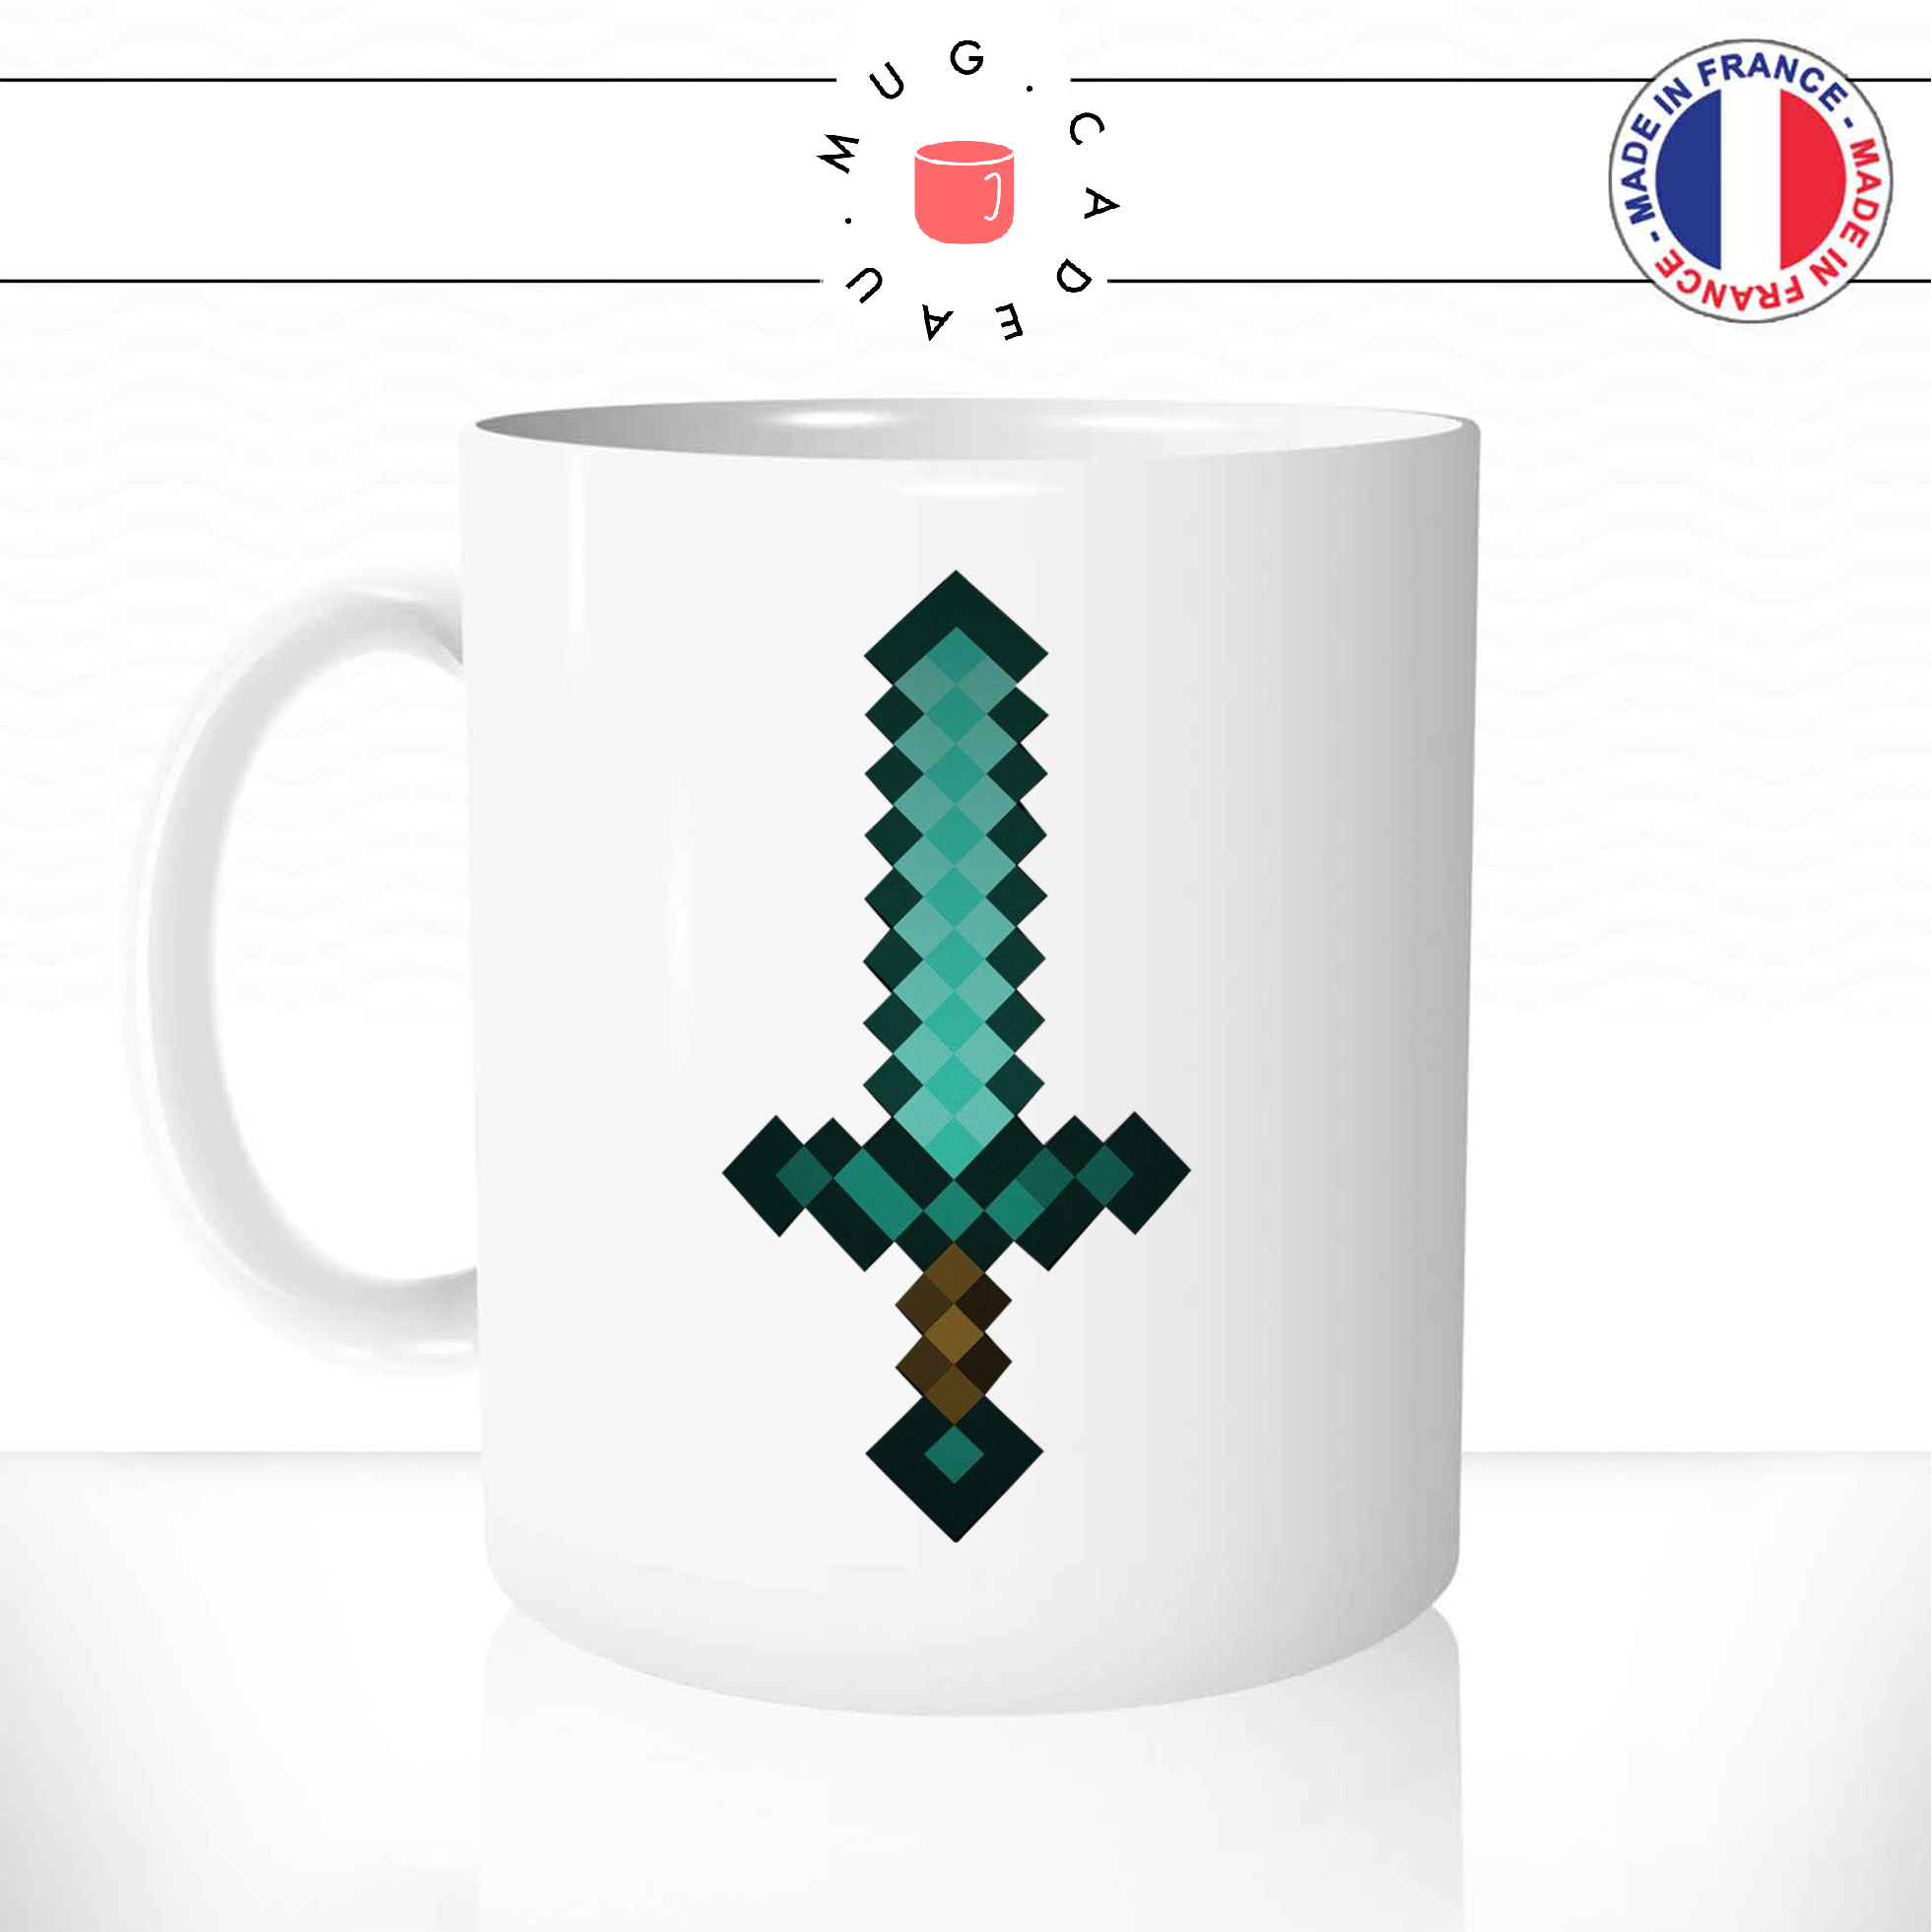 mug-tasse-ref10-jeux-video-minecraft-epee-sword-pixel-cafe-the-mugs-tasses-personnalise-anse-gauche